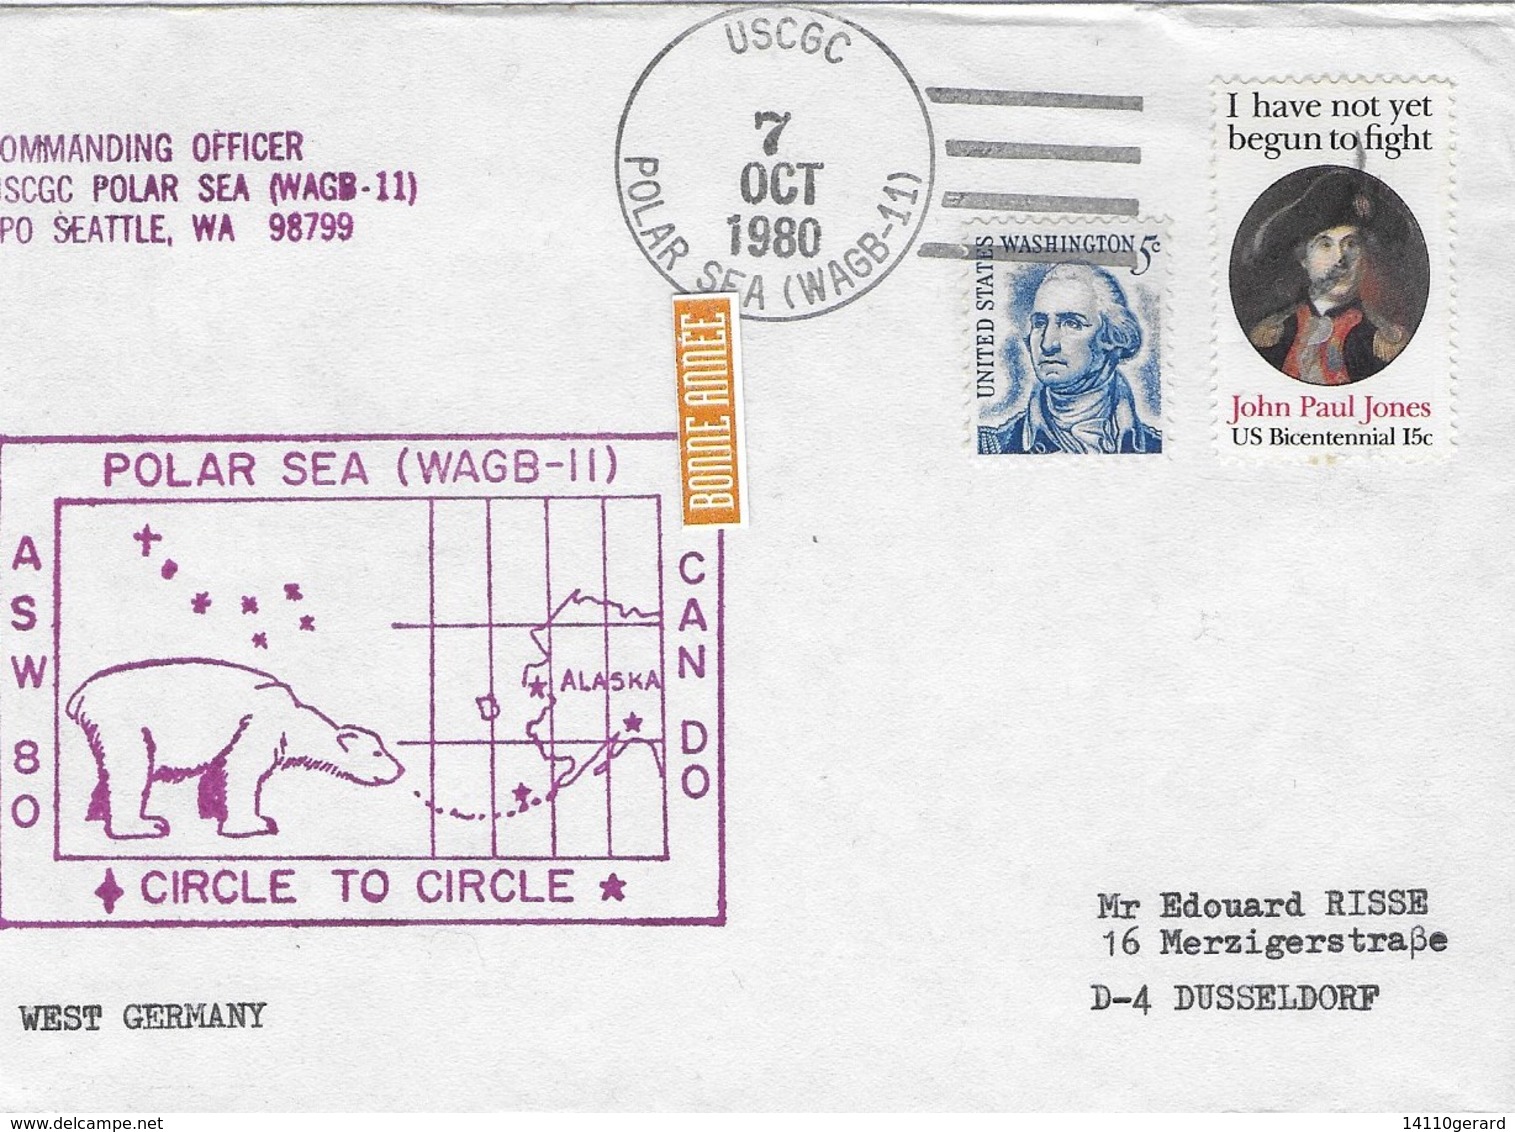 POLAR SEA (WAGB-II) 7 OCT 1980 - Arktis Expeditionen